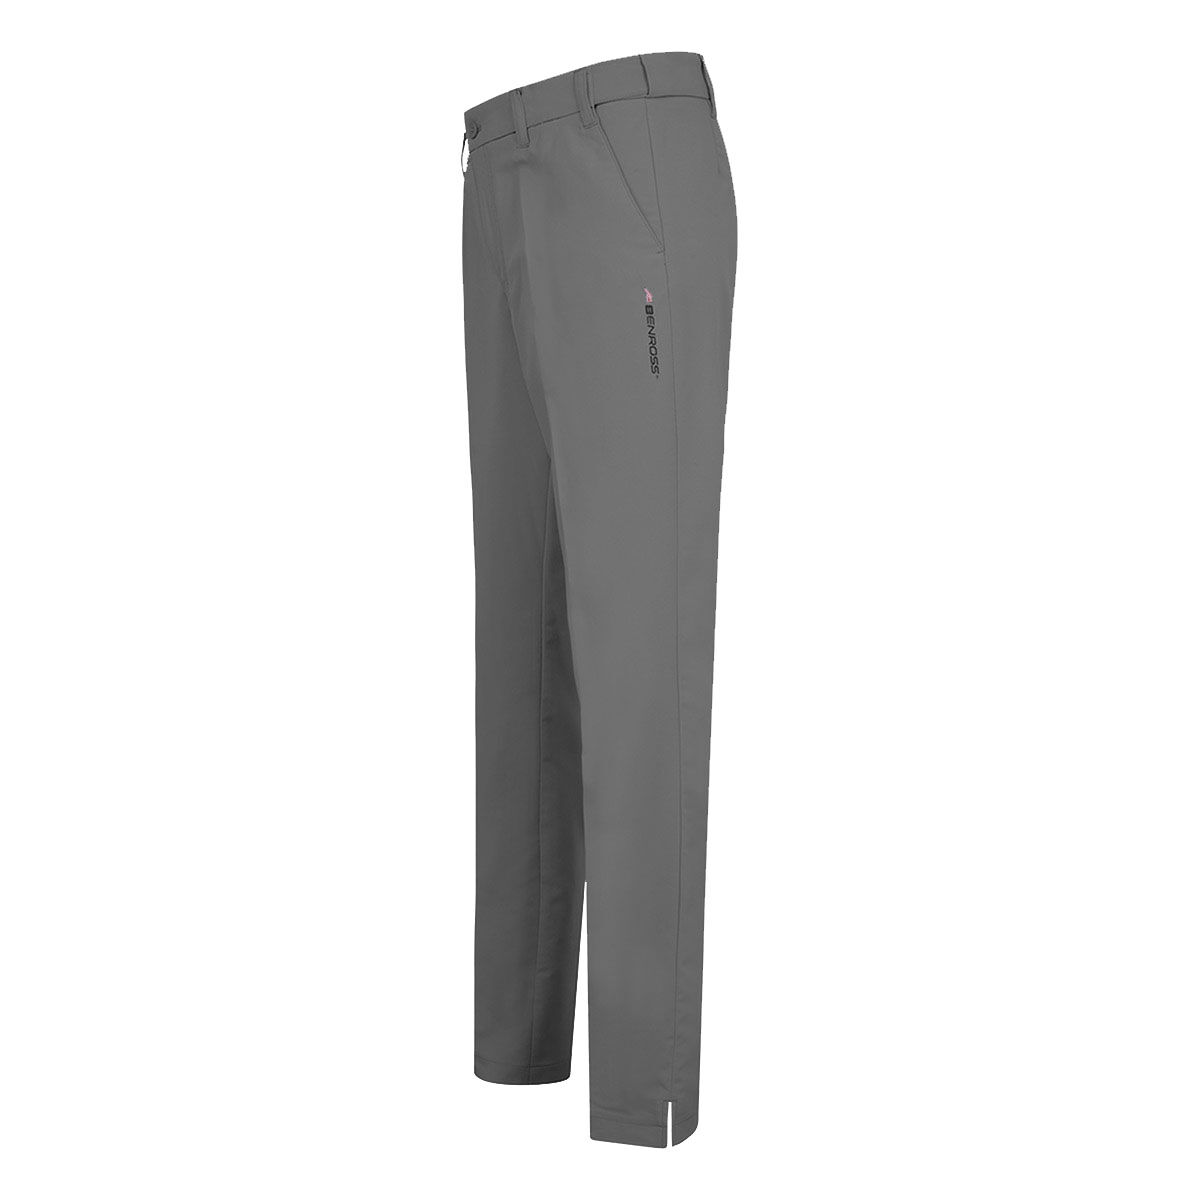 Benross Grey Tech Golf Trousers, Mens, 32, Long | American Golf, Size: 32